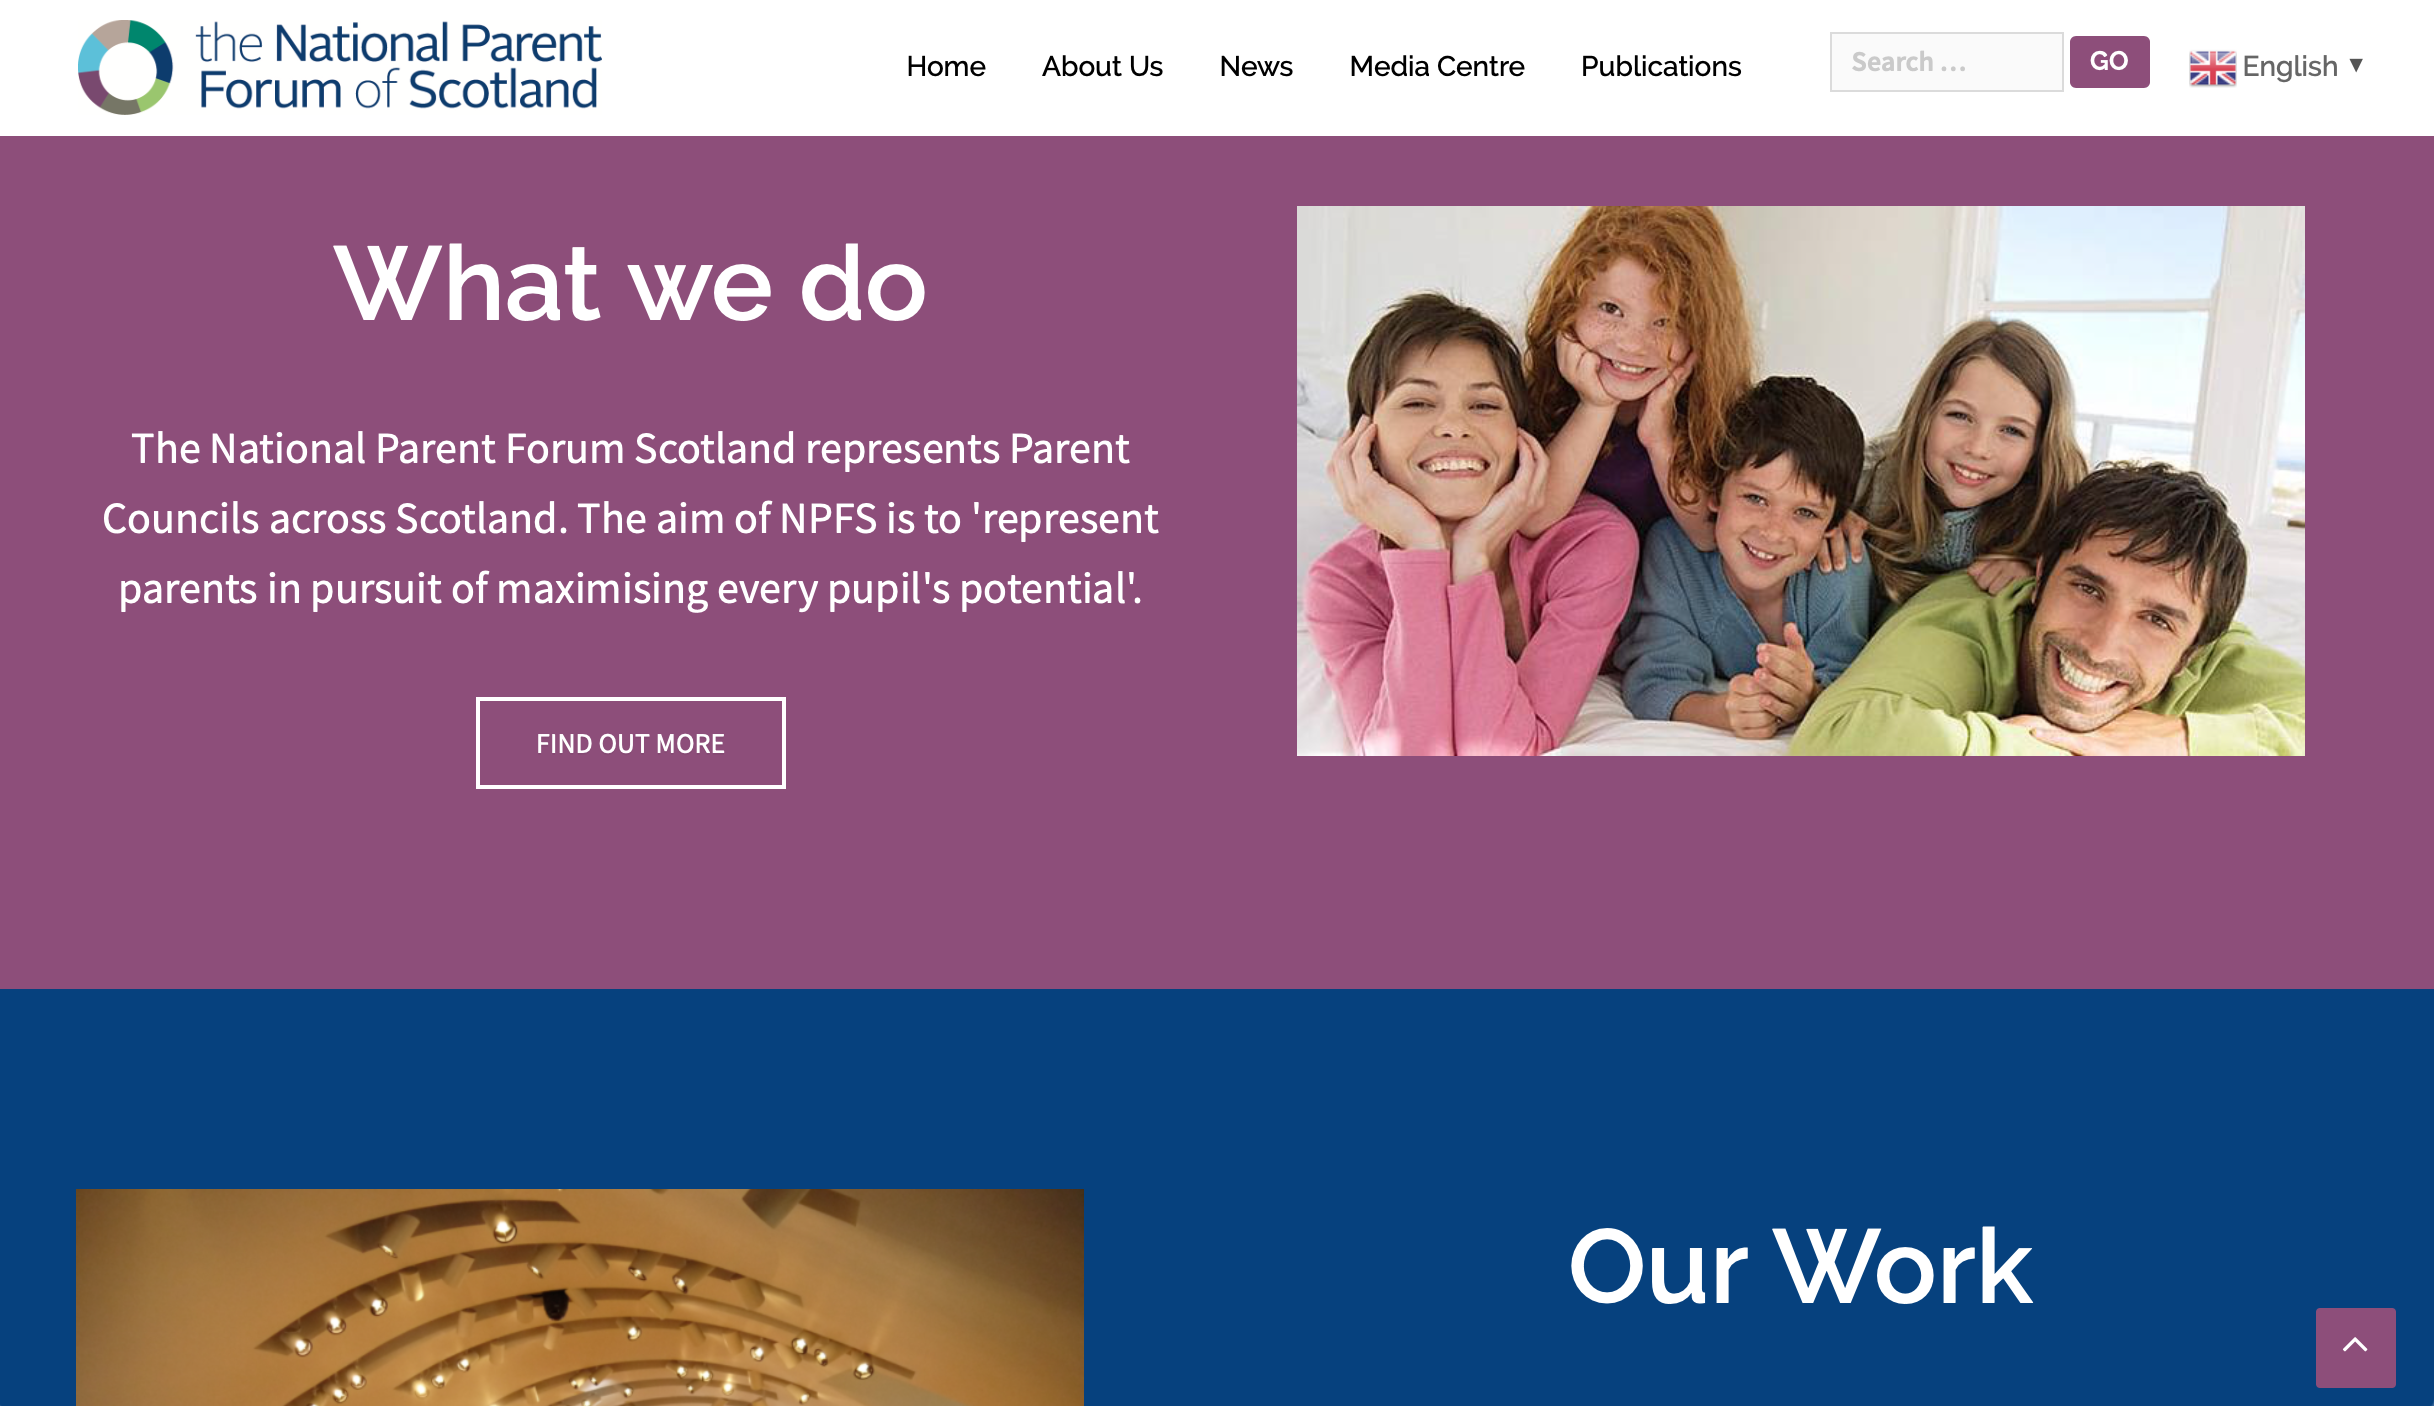 Image of National Parent Forum of Scotland website.